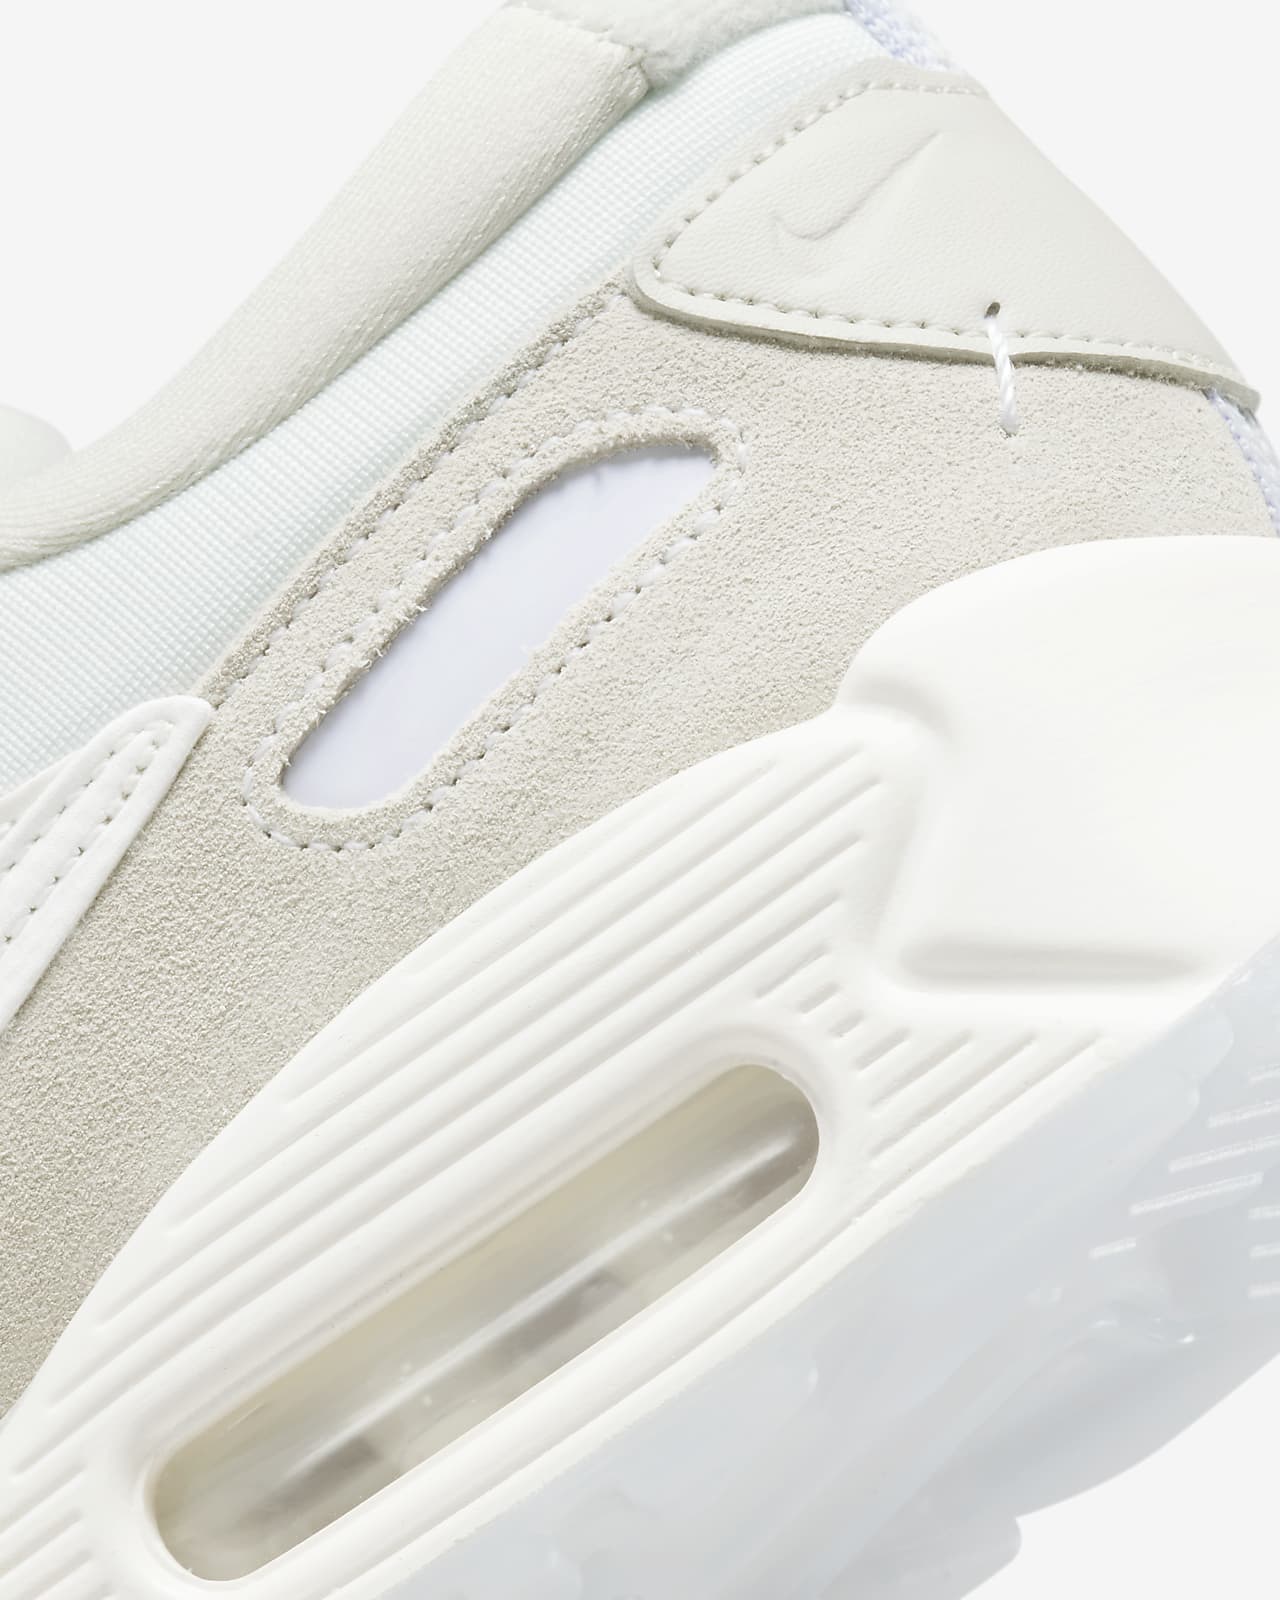 Sneakers Release – Nike Air Max 90 Futura “White/Bright  Crimson-Fuchsia Dream” Women’s Shoe Launching 3/1